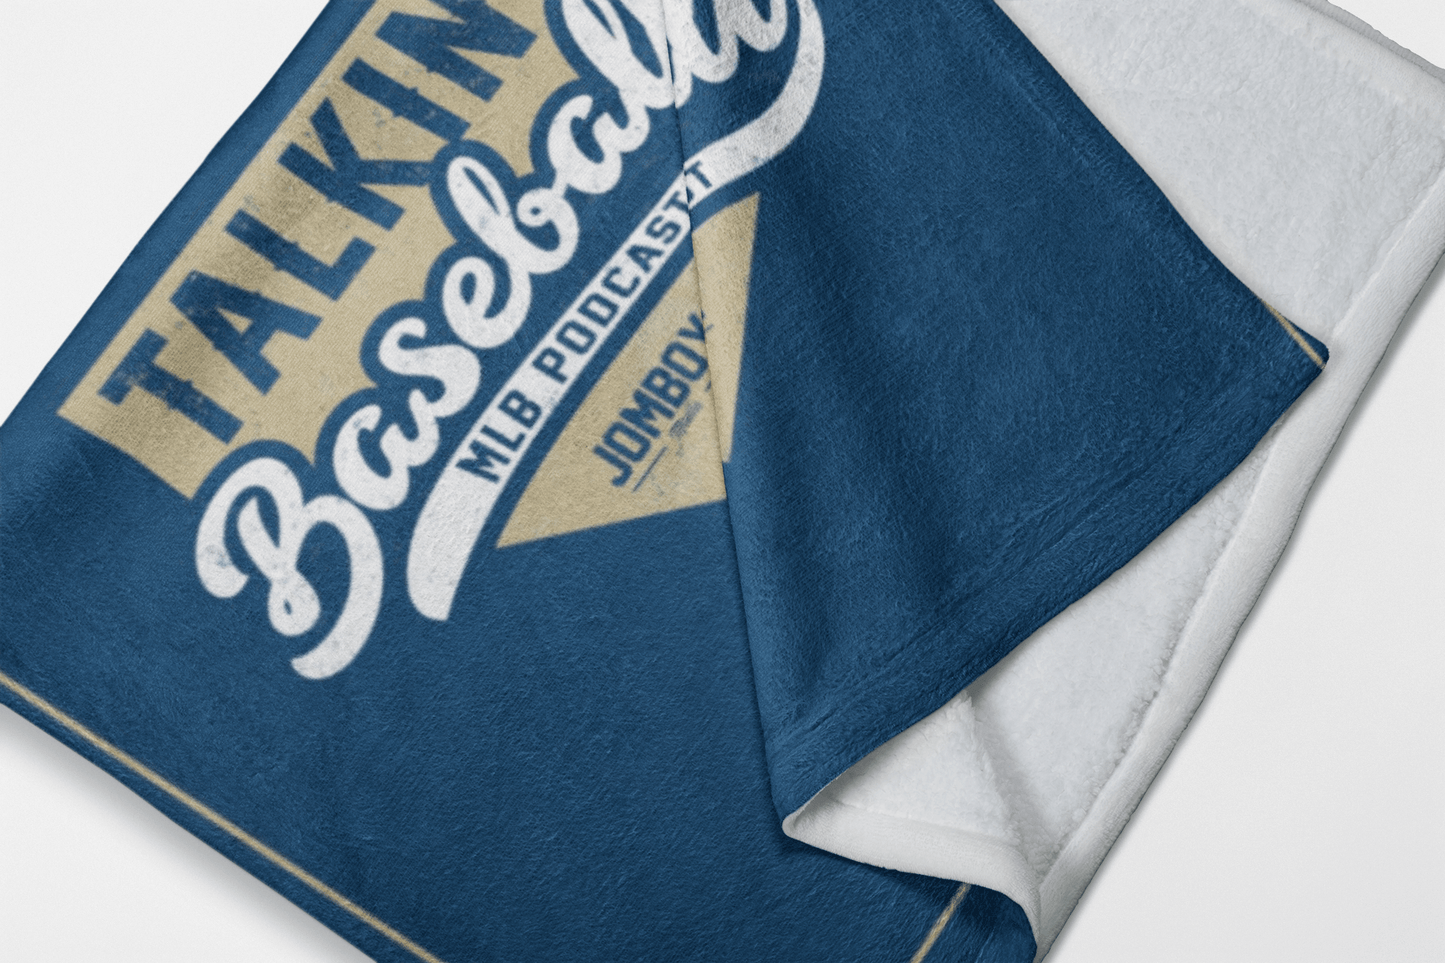 Talkin' Baseball | Blanket - Jomboy Media